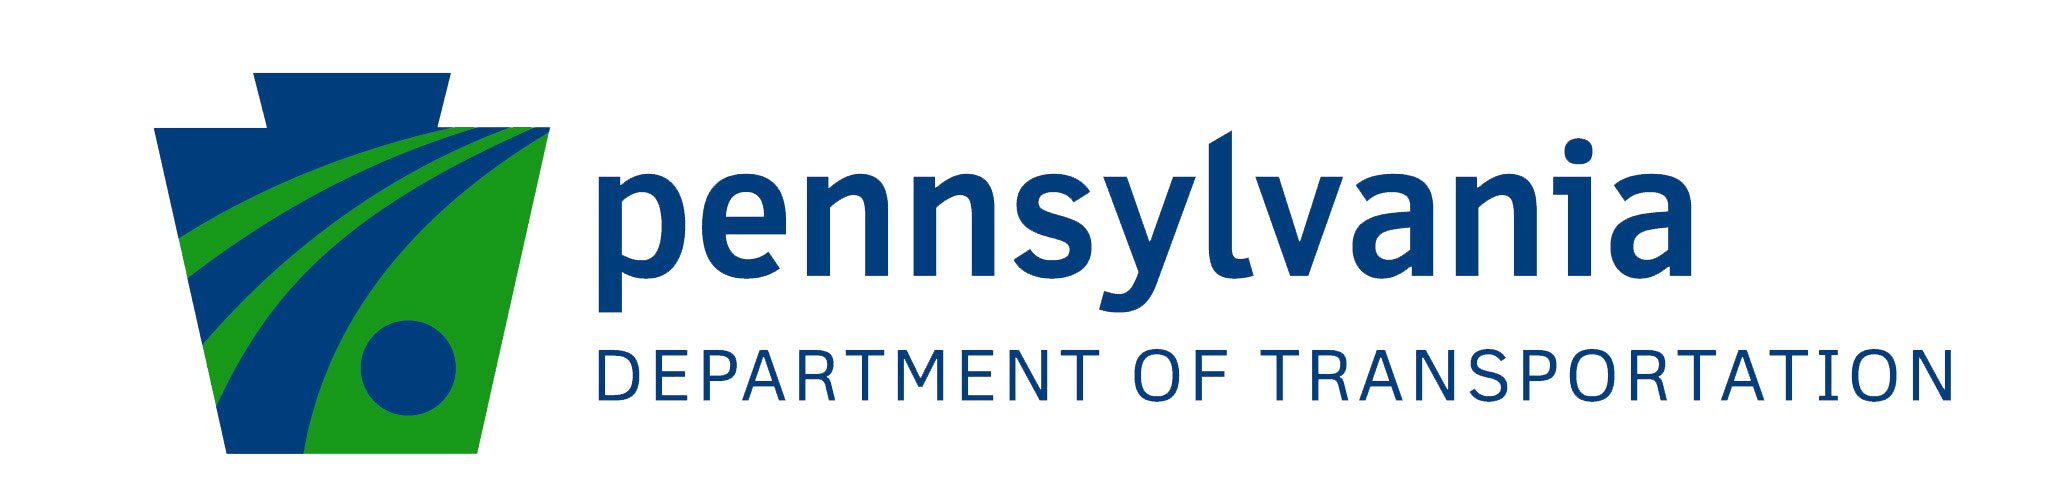 pennsylvania-department-of-transportation-logo